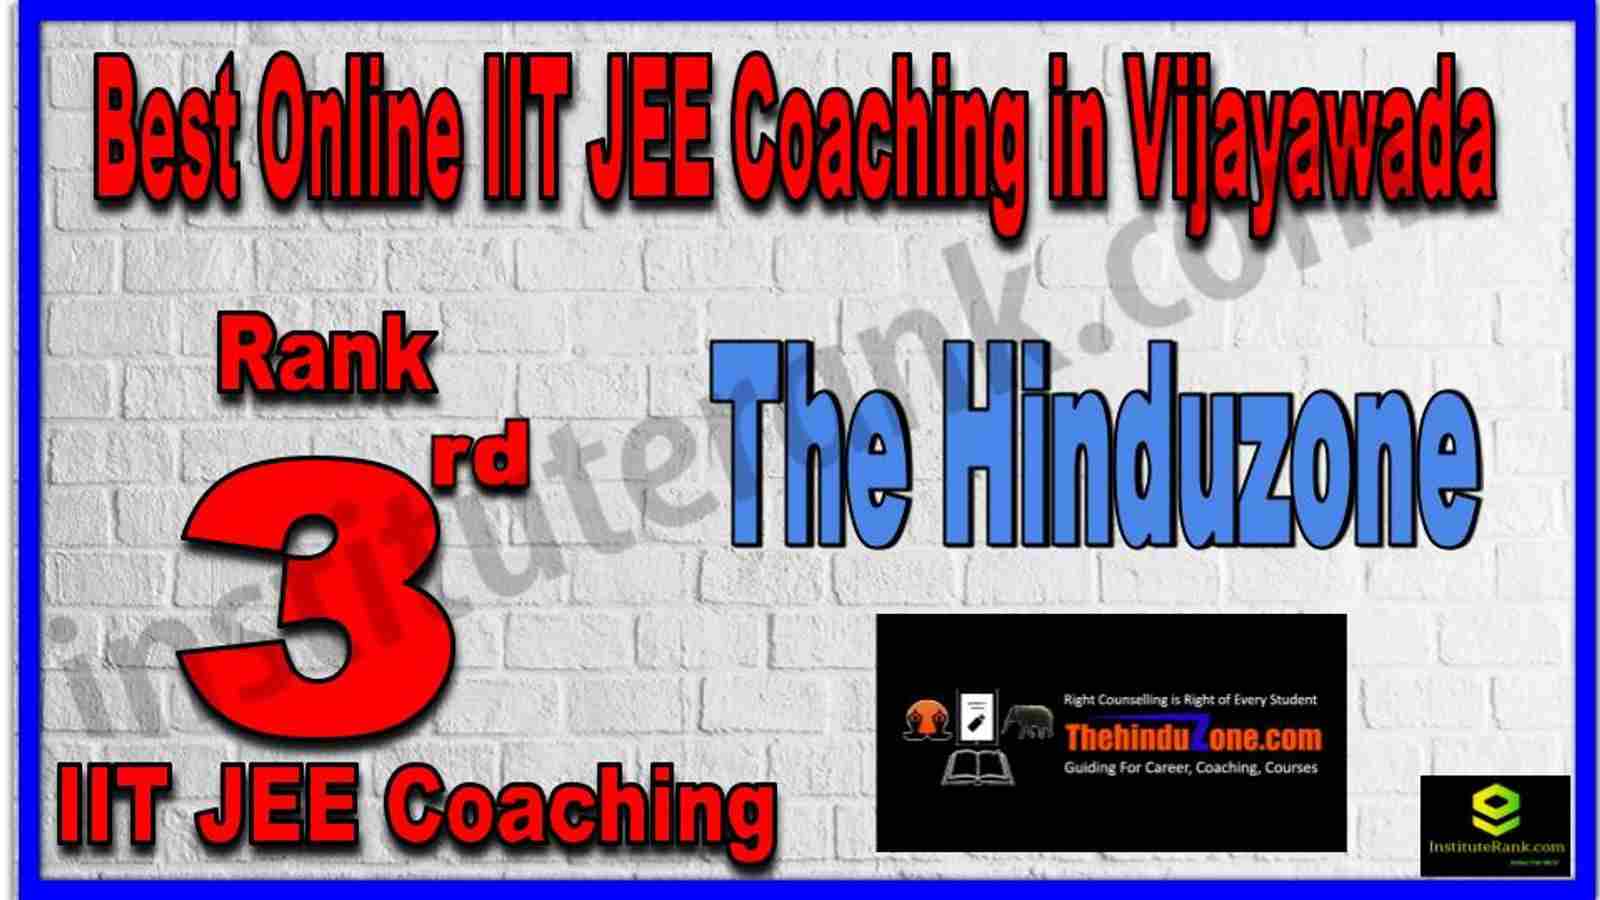 Rank 3rd Best Online IIT JEE Coaching in Vijayawada